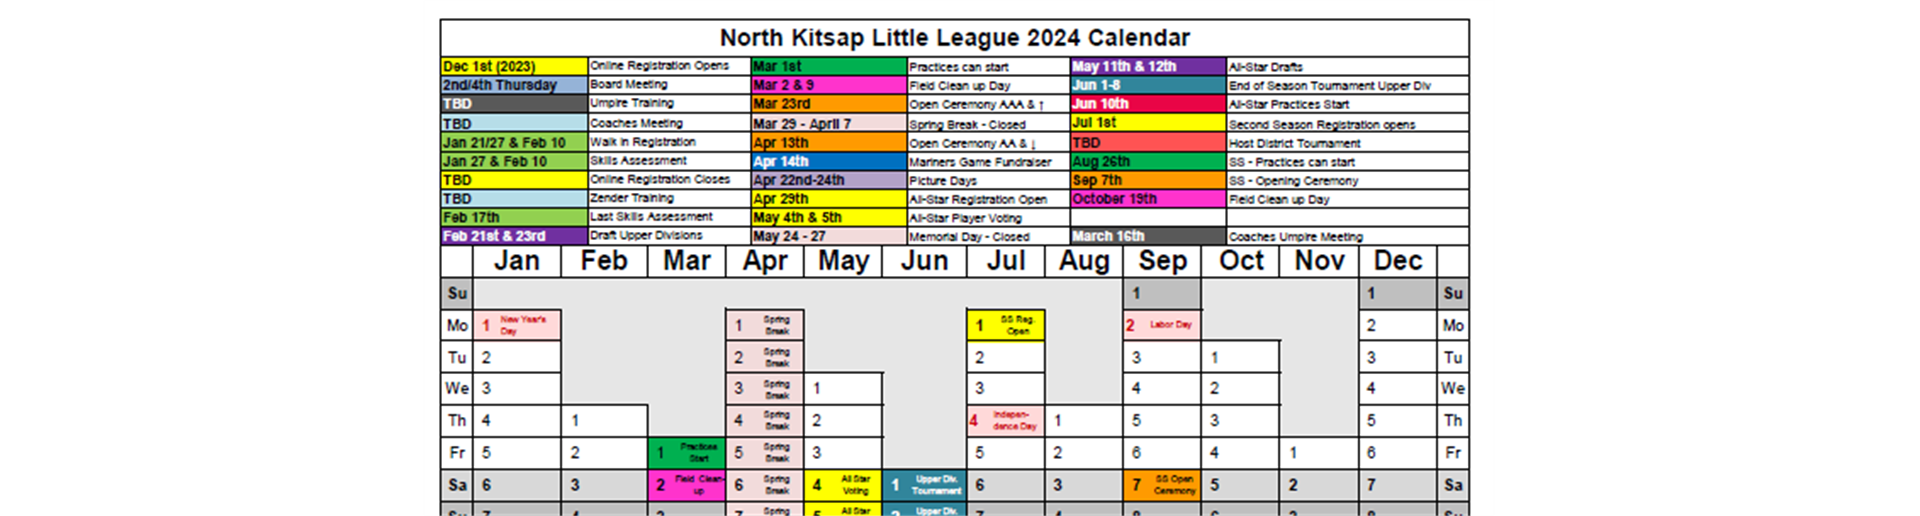 2024 NKLL Calendar